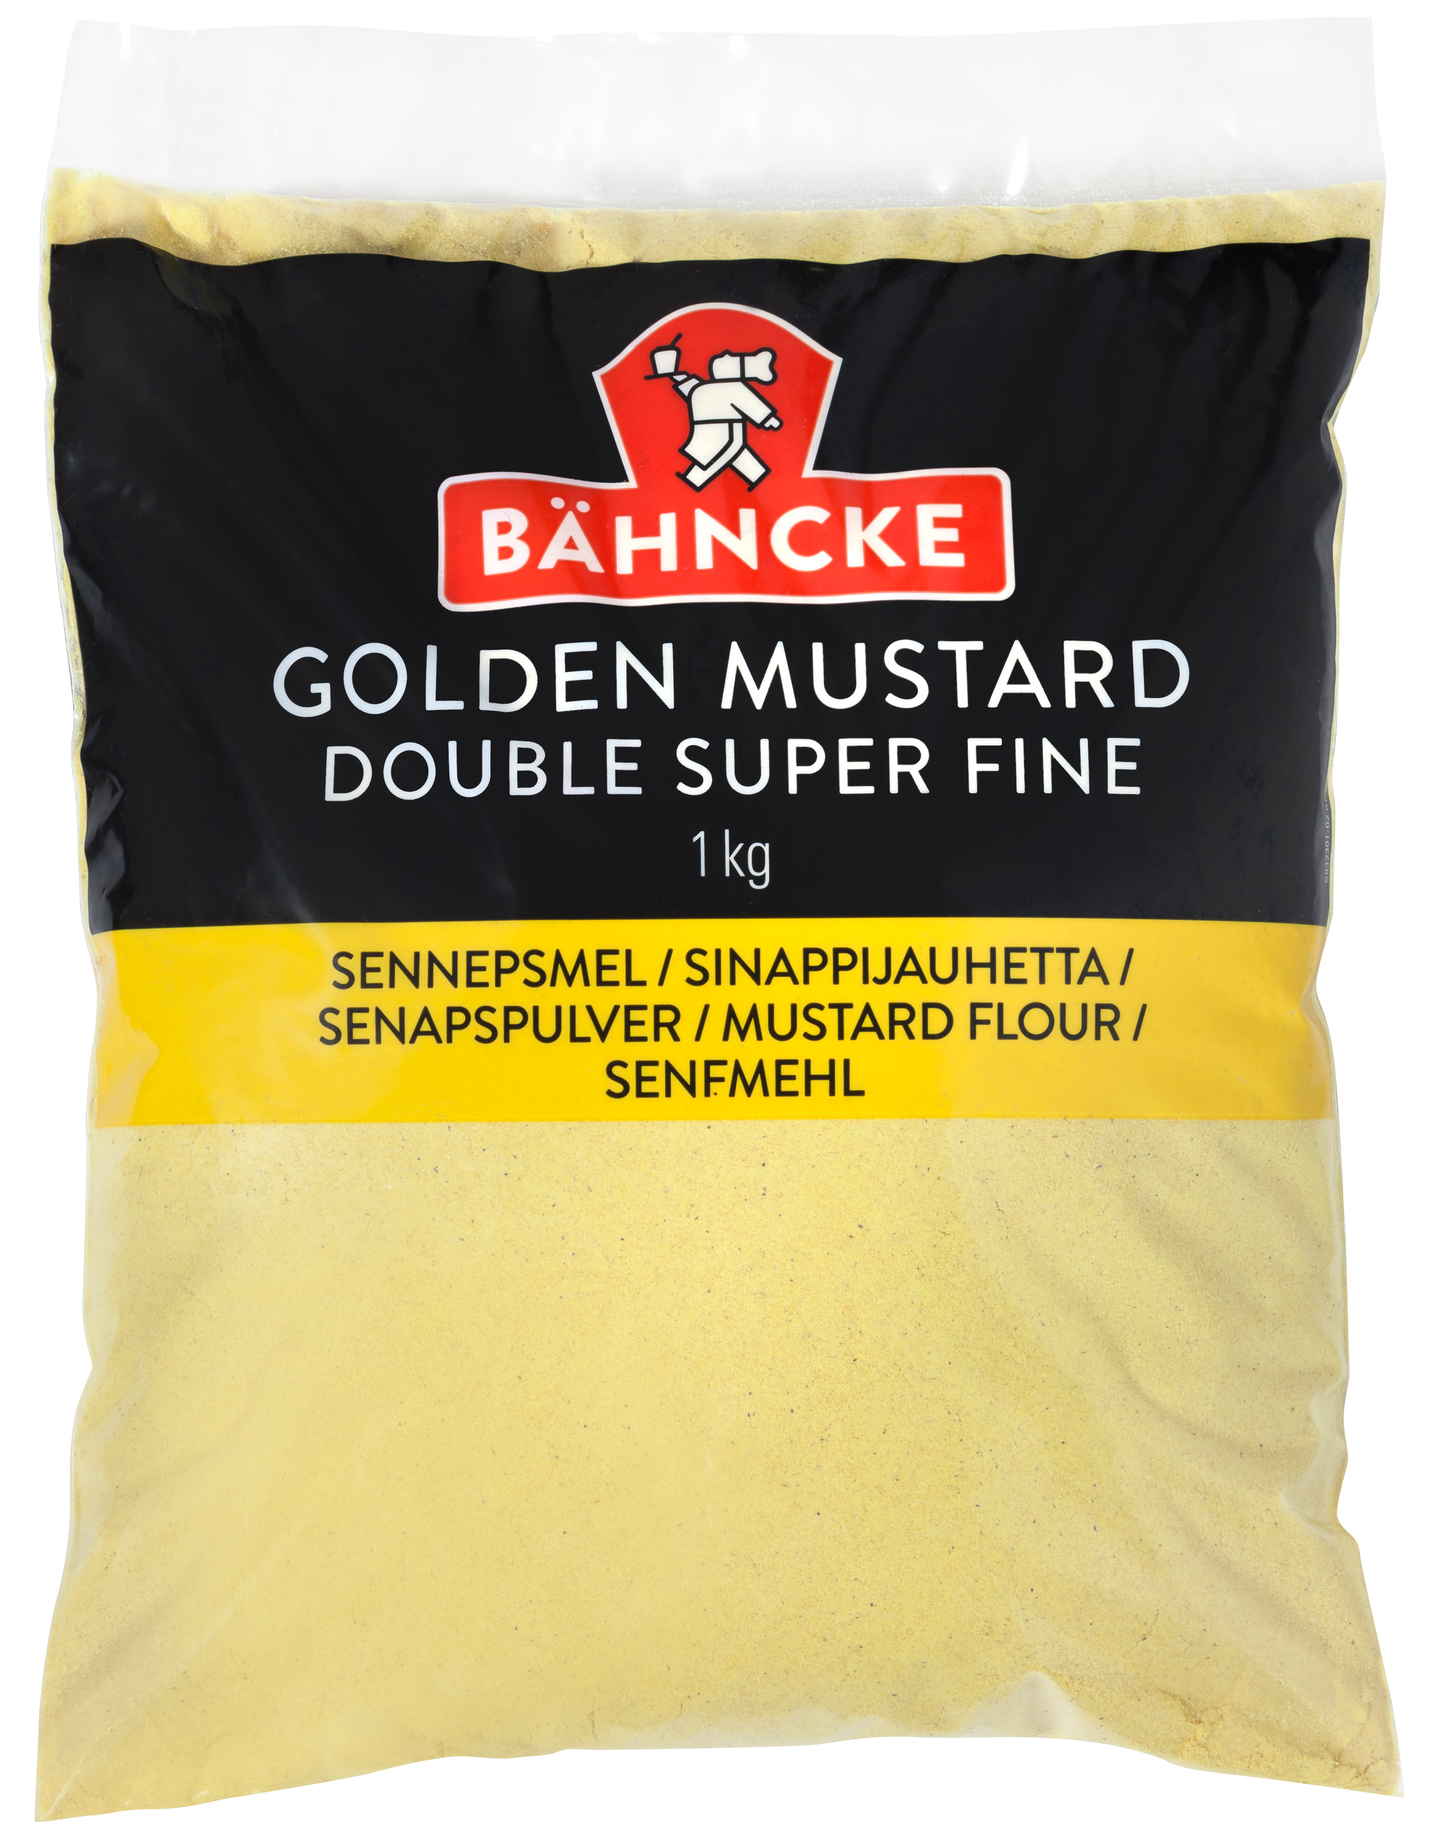 Golden mustard sinappijauho 1kg tanskalainen